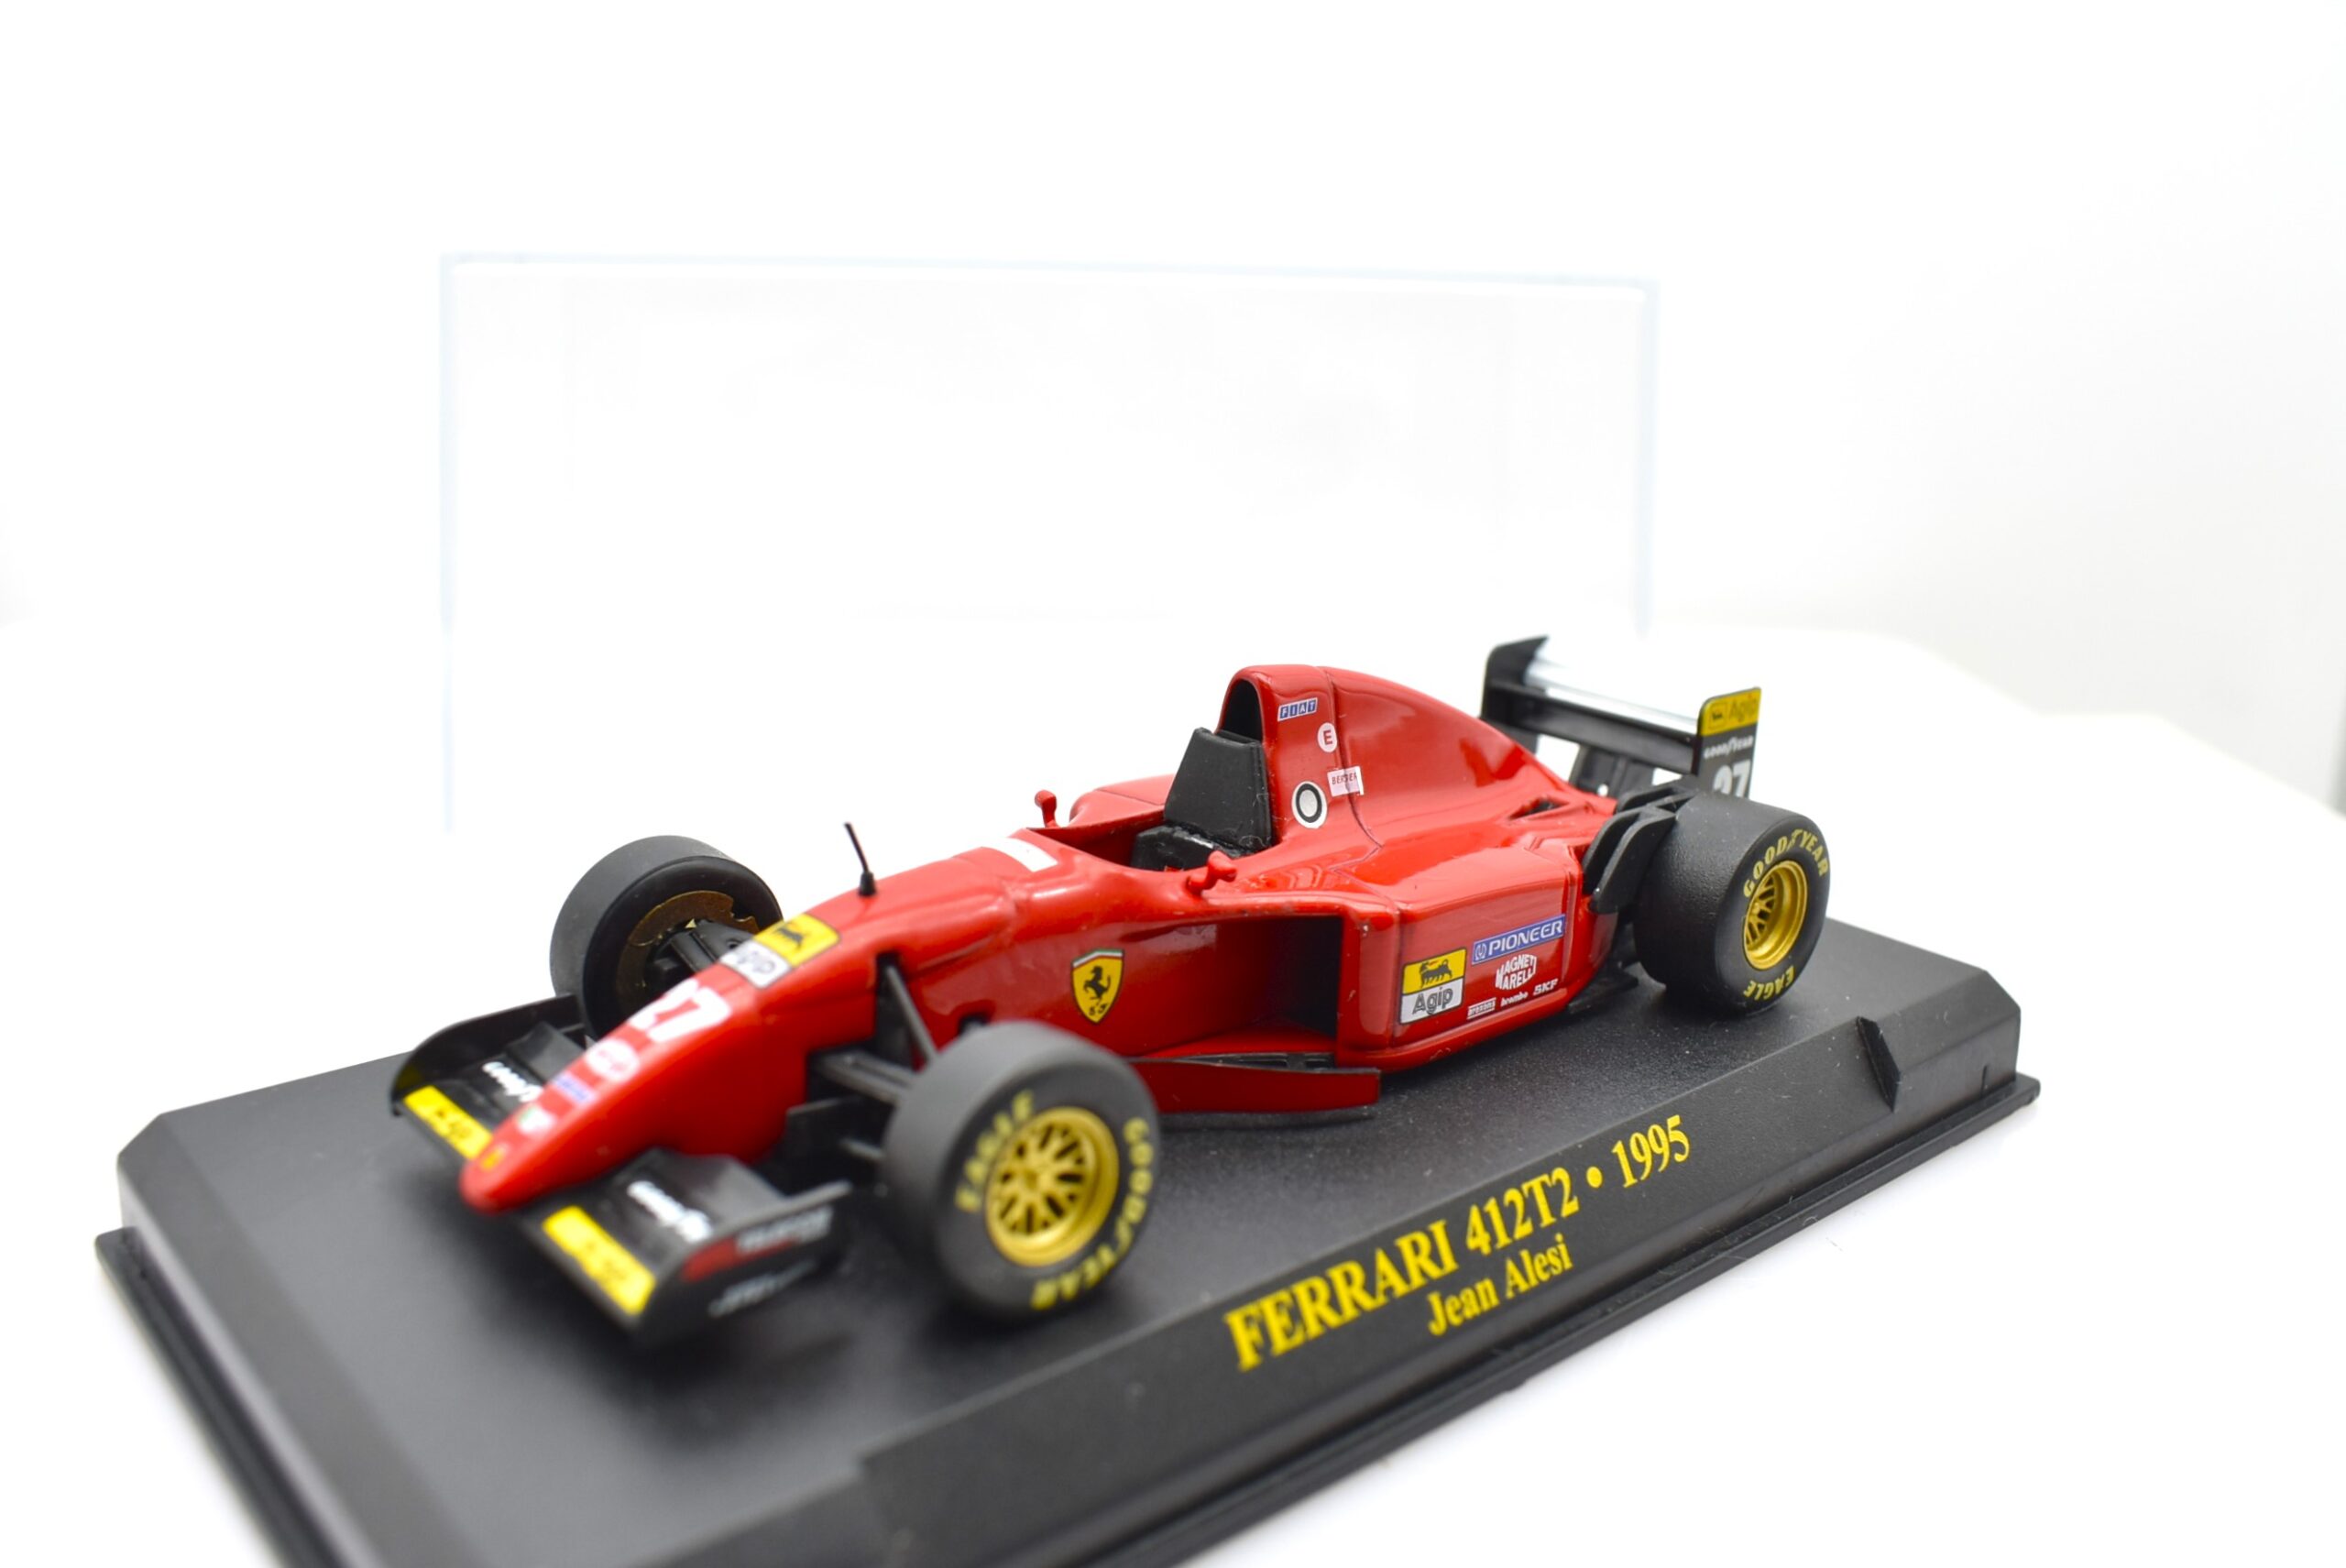 Ferrari f1 412 T2 models 1:43 scale formula 1 gp car vehicles ALESI ixo qw